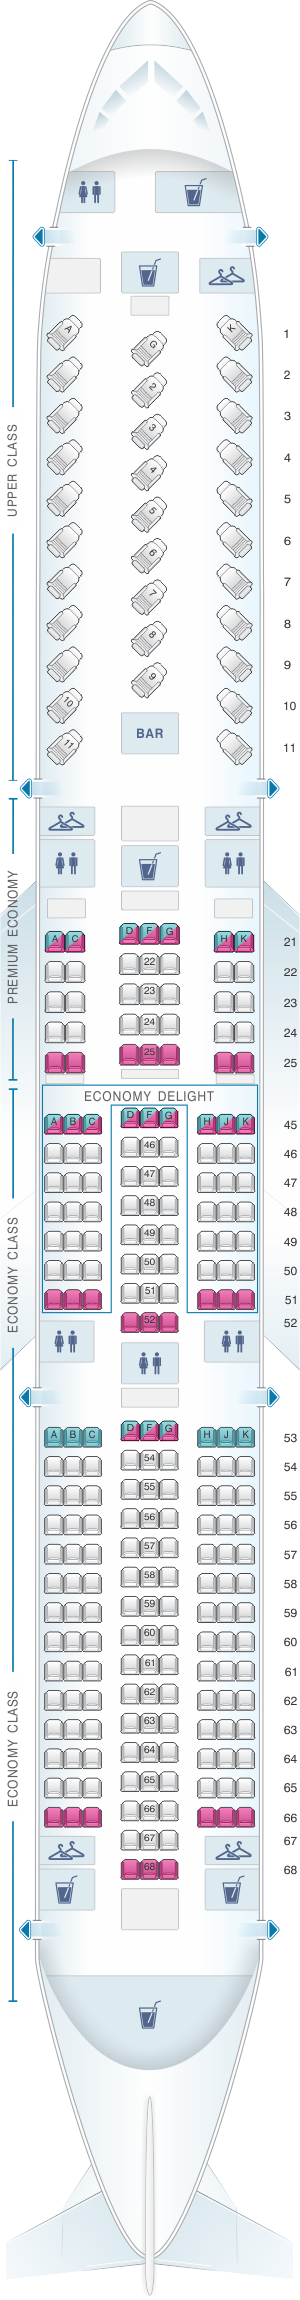 Seat map for Virgin Atlantic Boeing B787 900